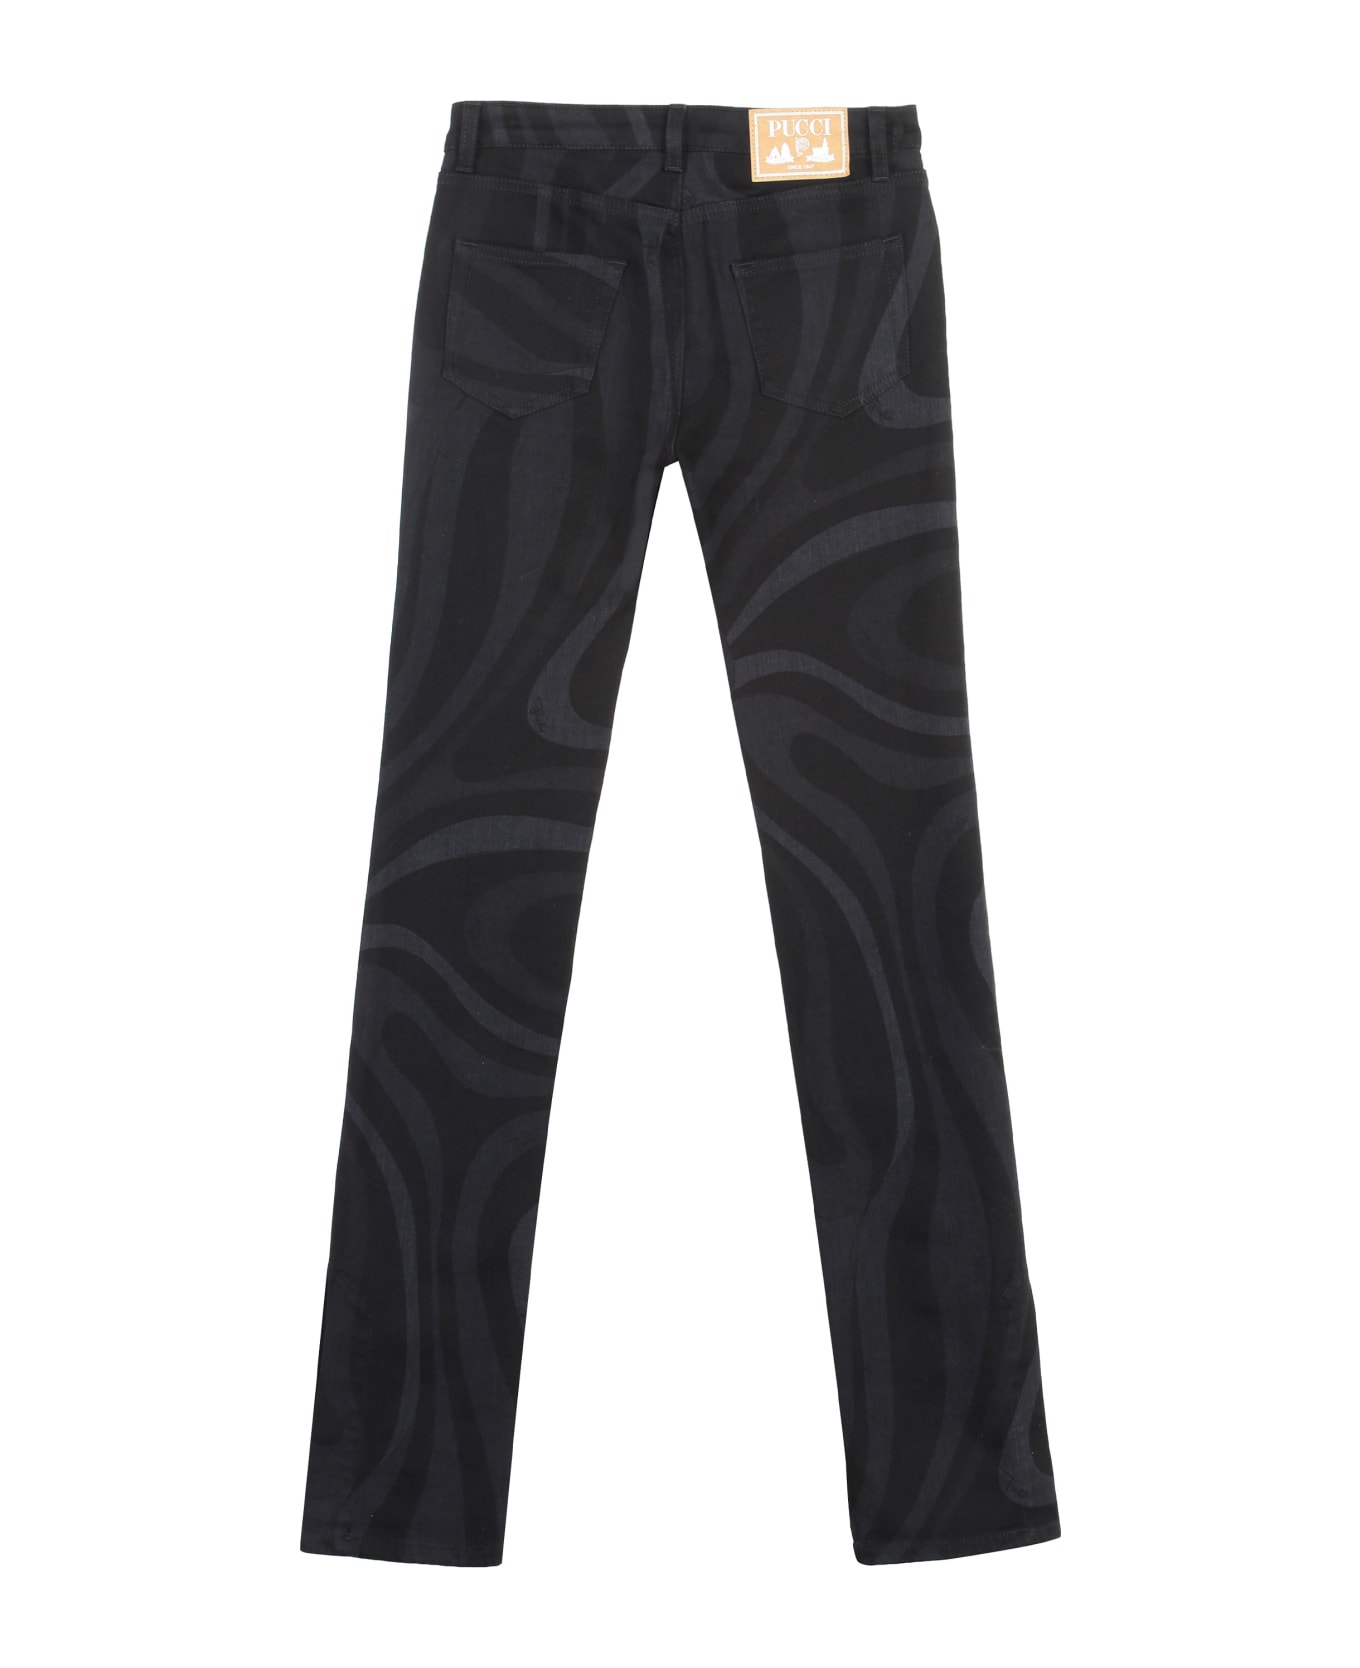 Pucci 5-pocket Straight-leg Jeans - black